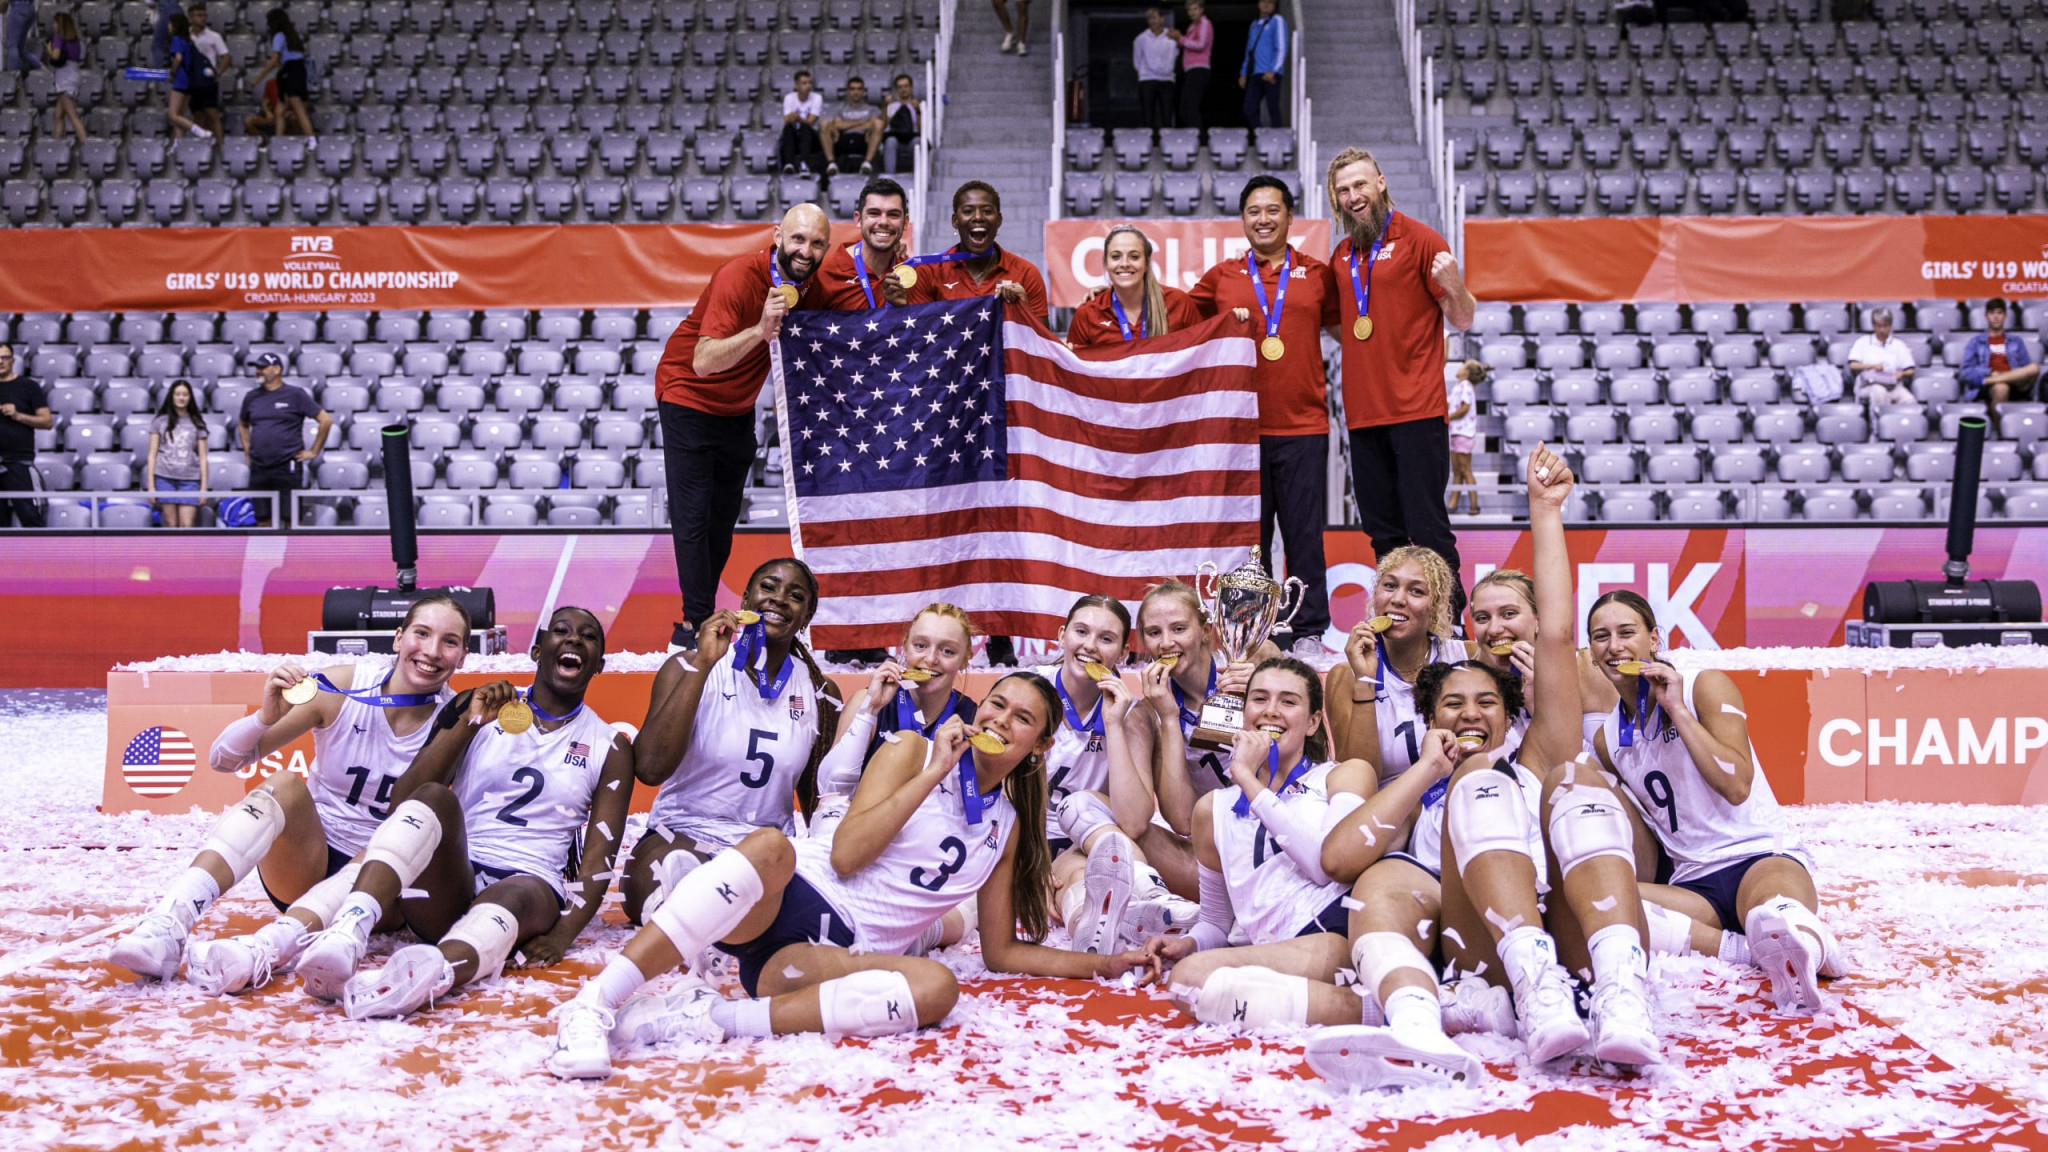 Stunning US comeback reclaims FIVB Girls' Under-19 World Championship